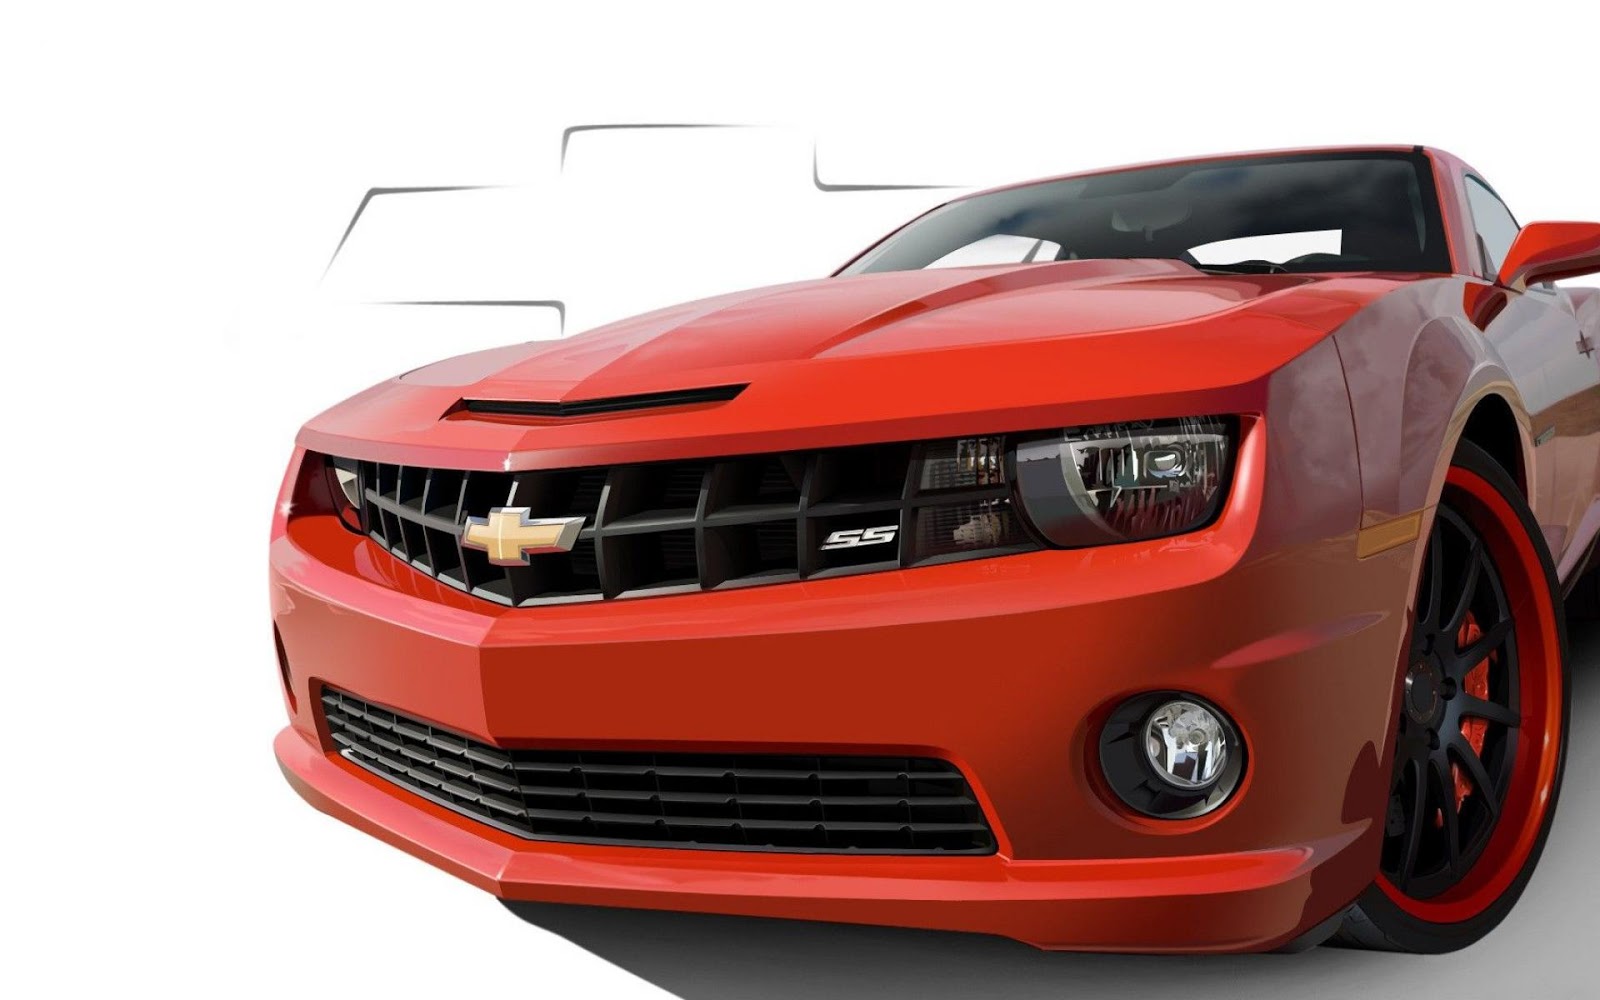 Chevrolet Camaro SS Red | Full HD Desktop Wallpapers 1080p